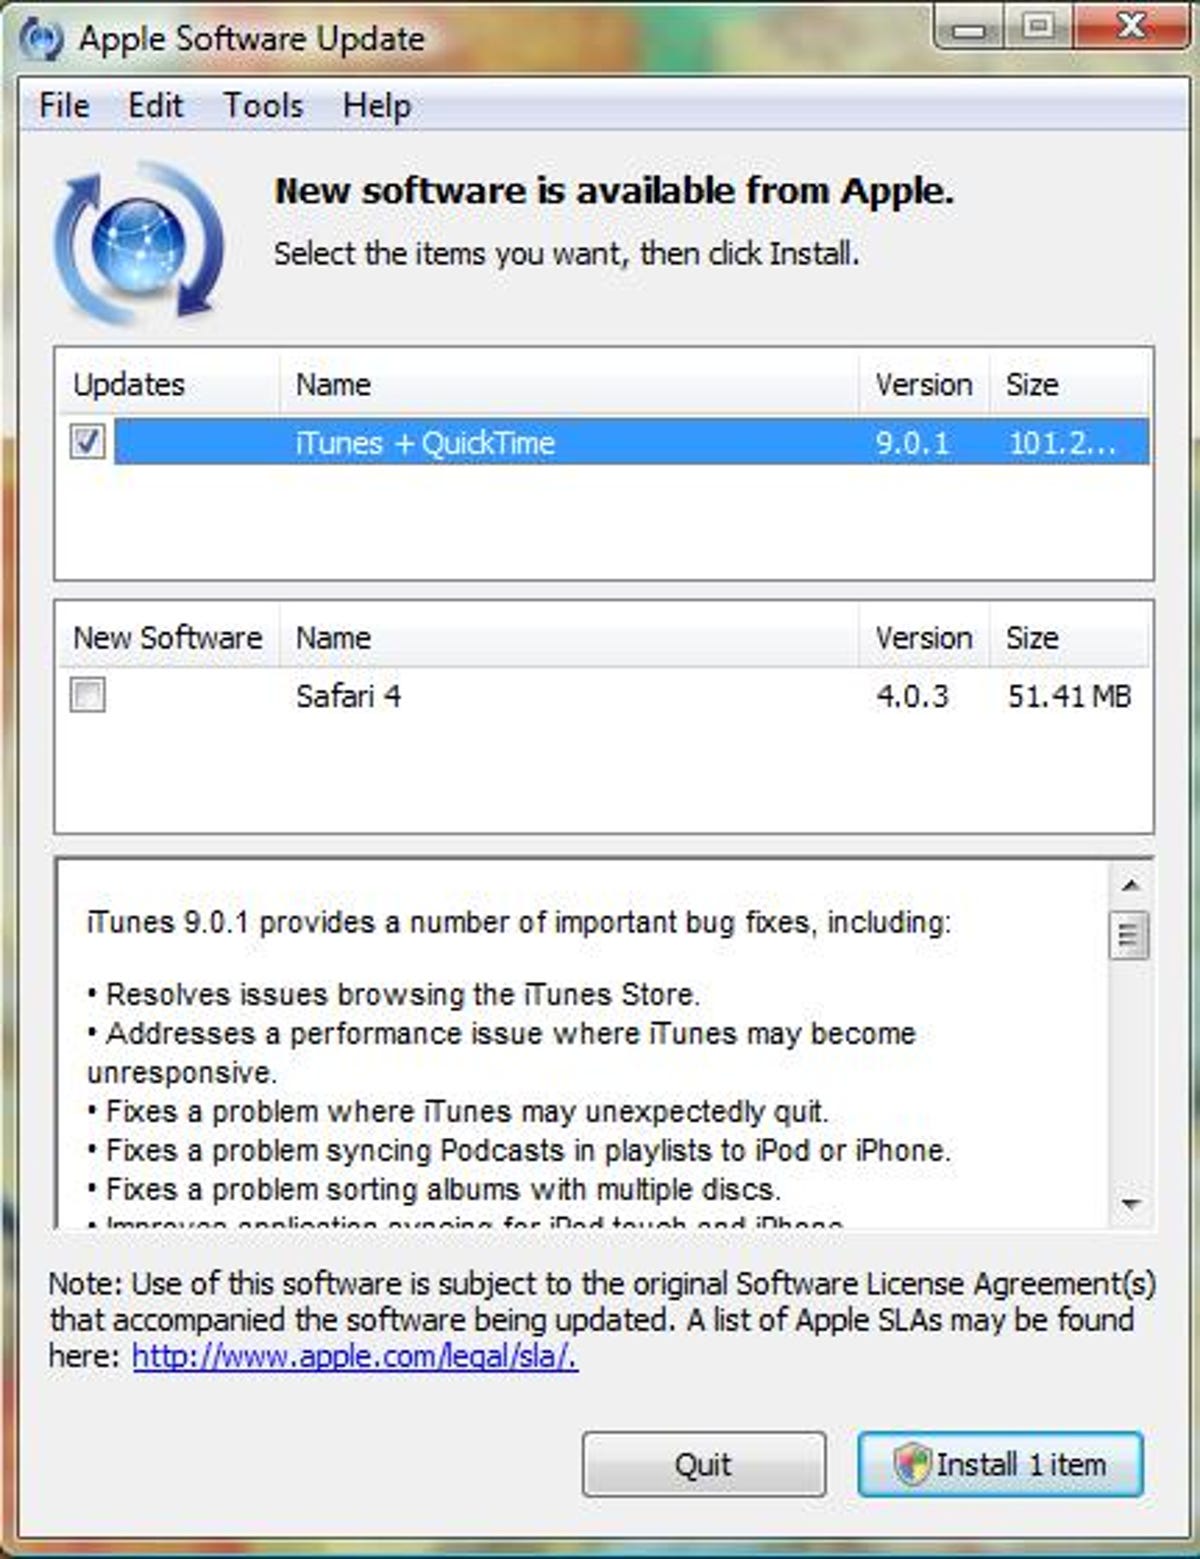 Apple Software Update dialog